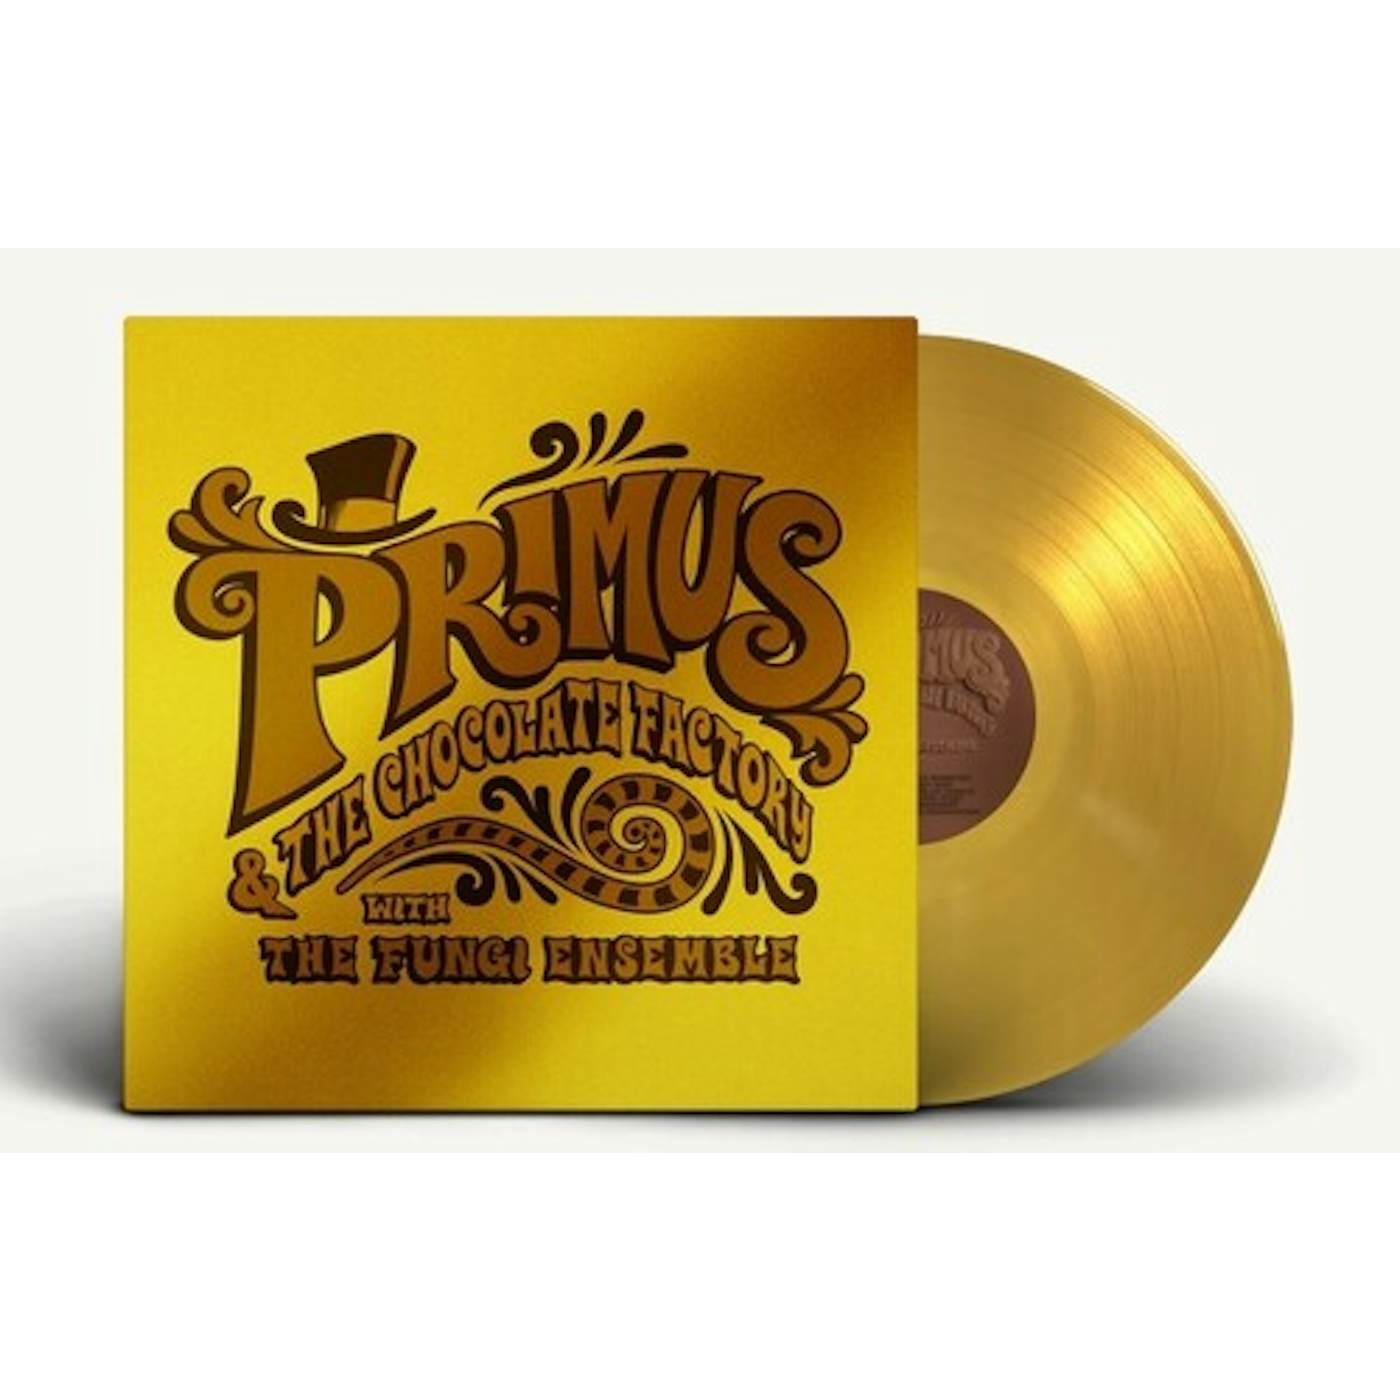 Primus & The Chocolate Factory With Fungi Ensemble Vinyl Record